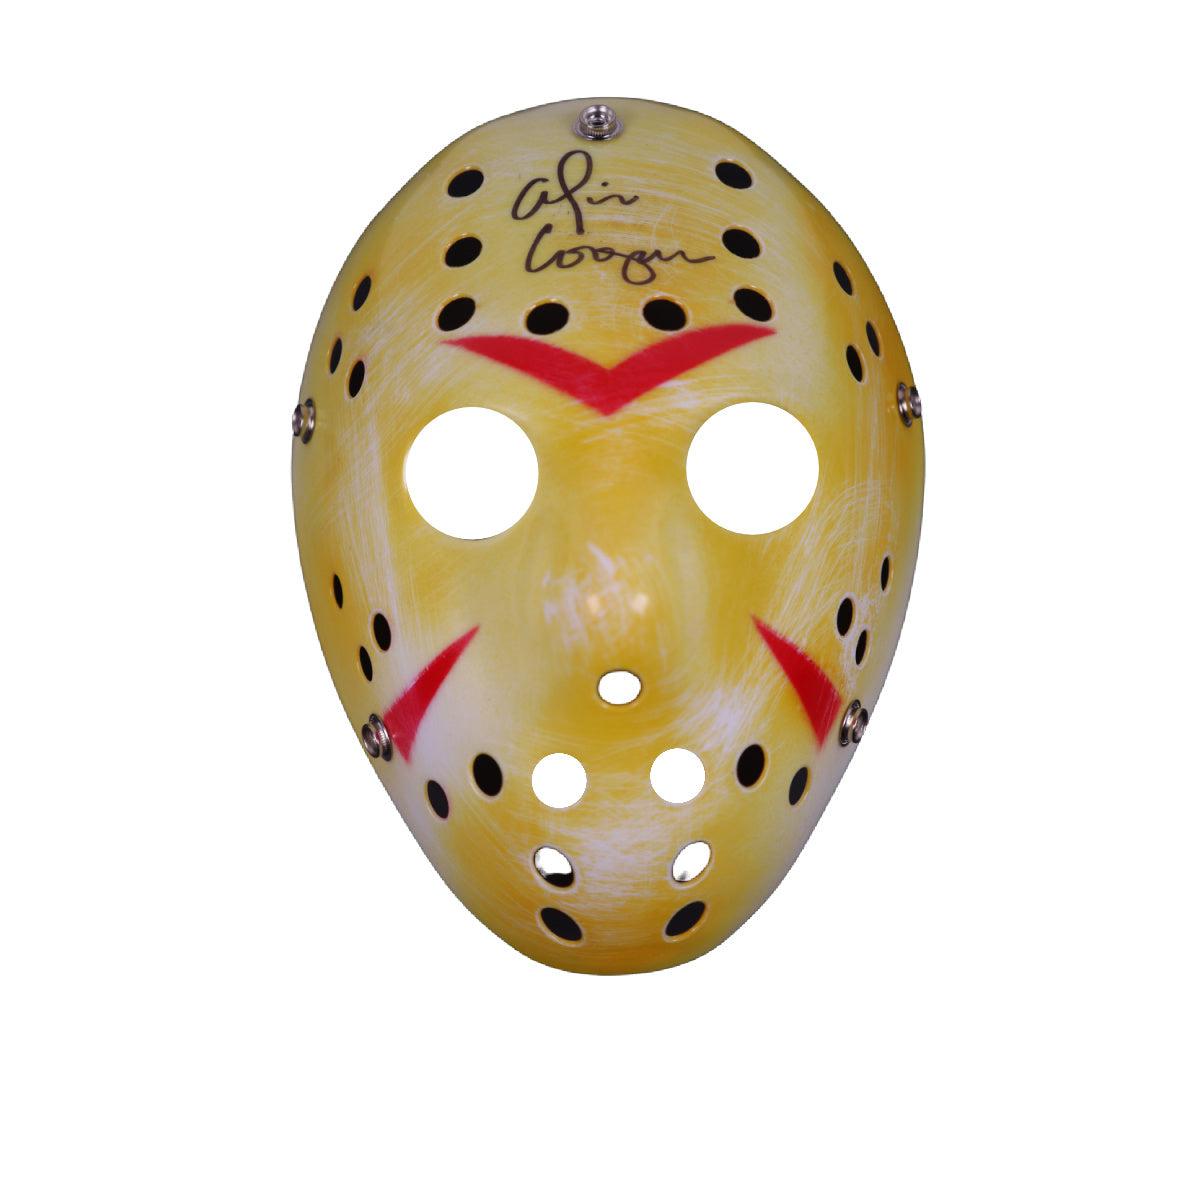 Alice Cooper Signed Jason Friday the 13th Mask Autographed JSA COA